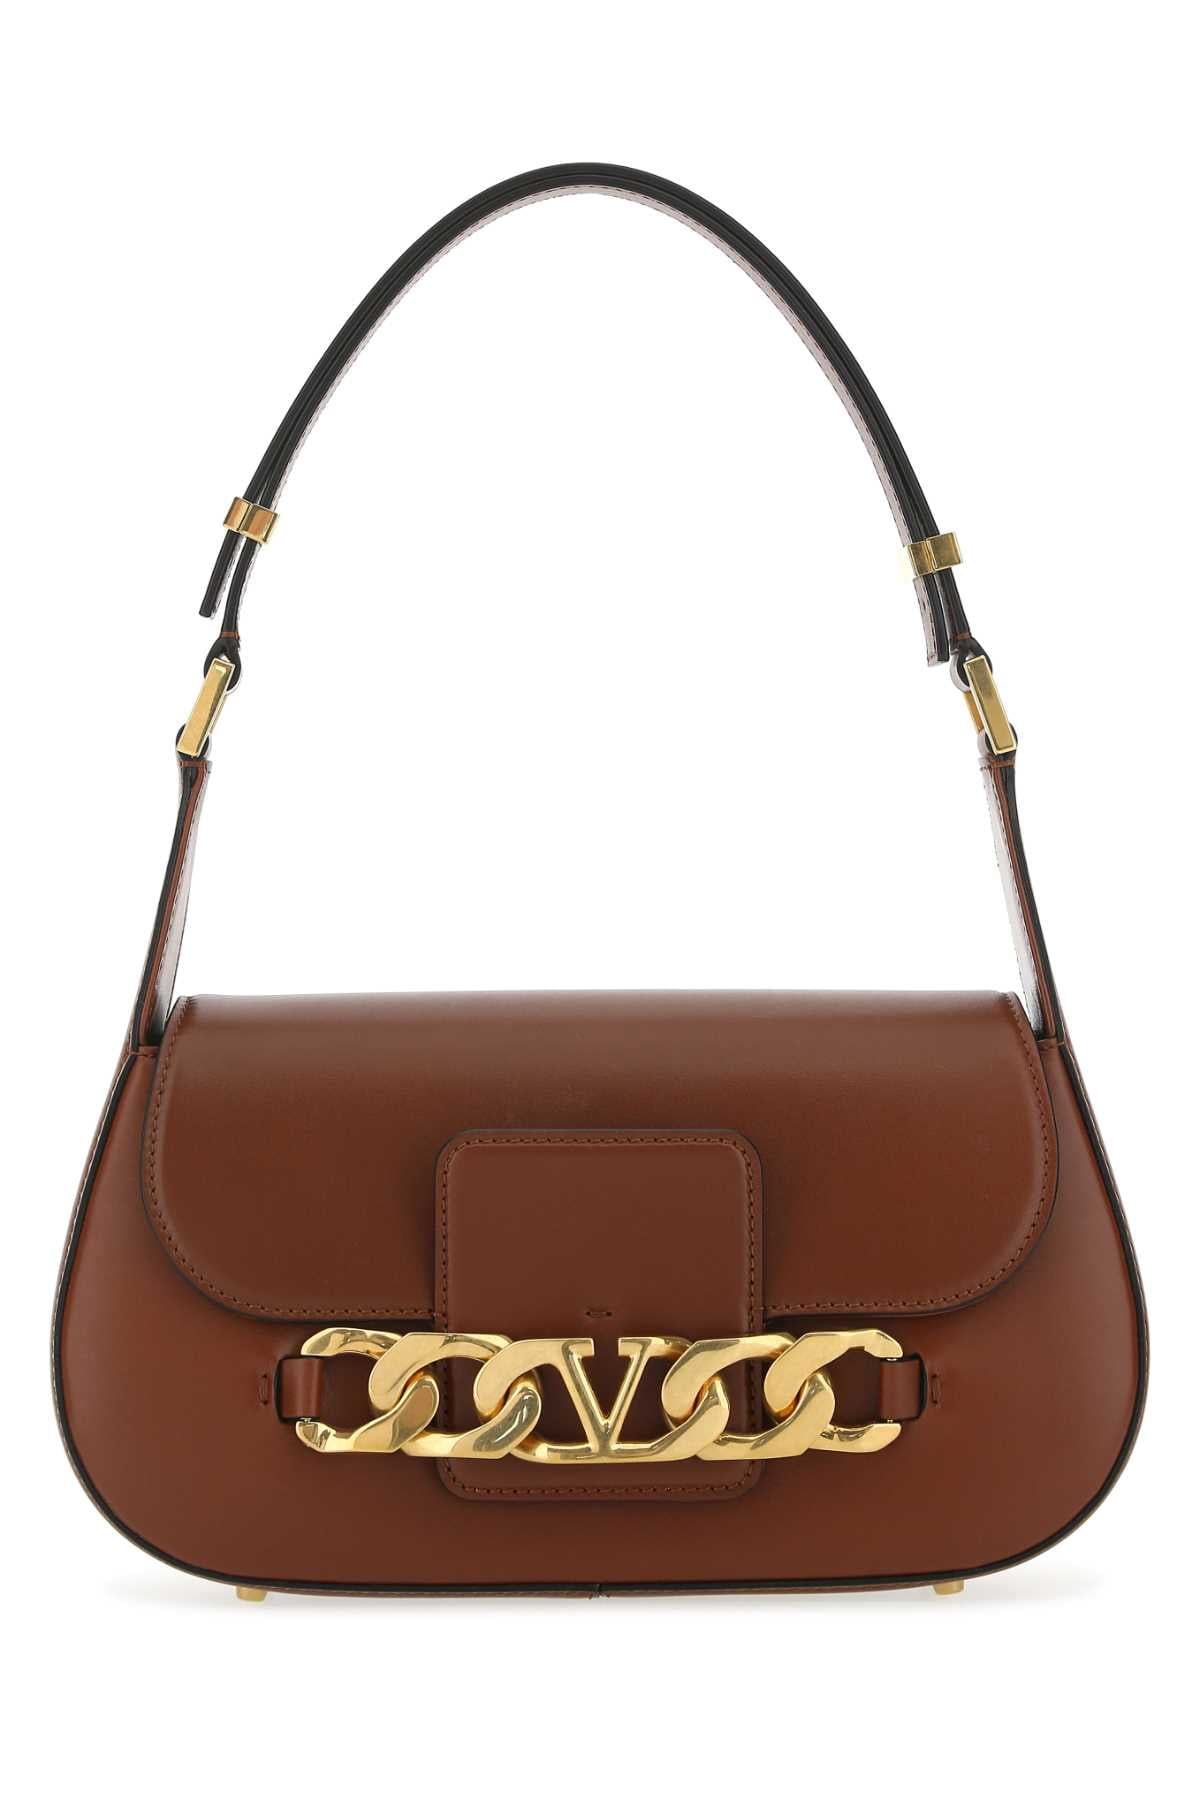 Valentino Garavani Brown Leather Shoulder Bag - Walmart.com